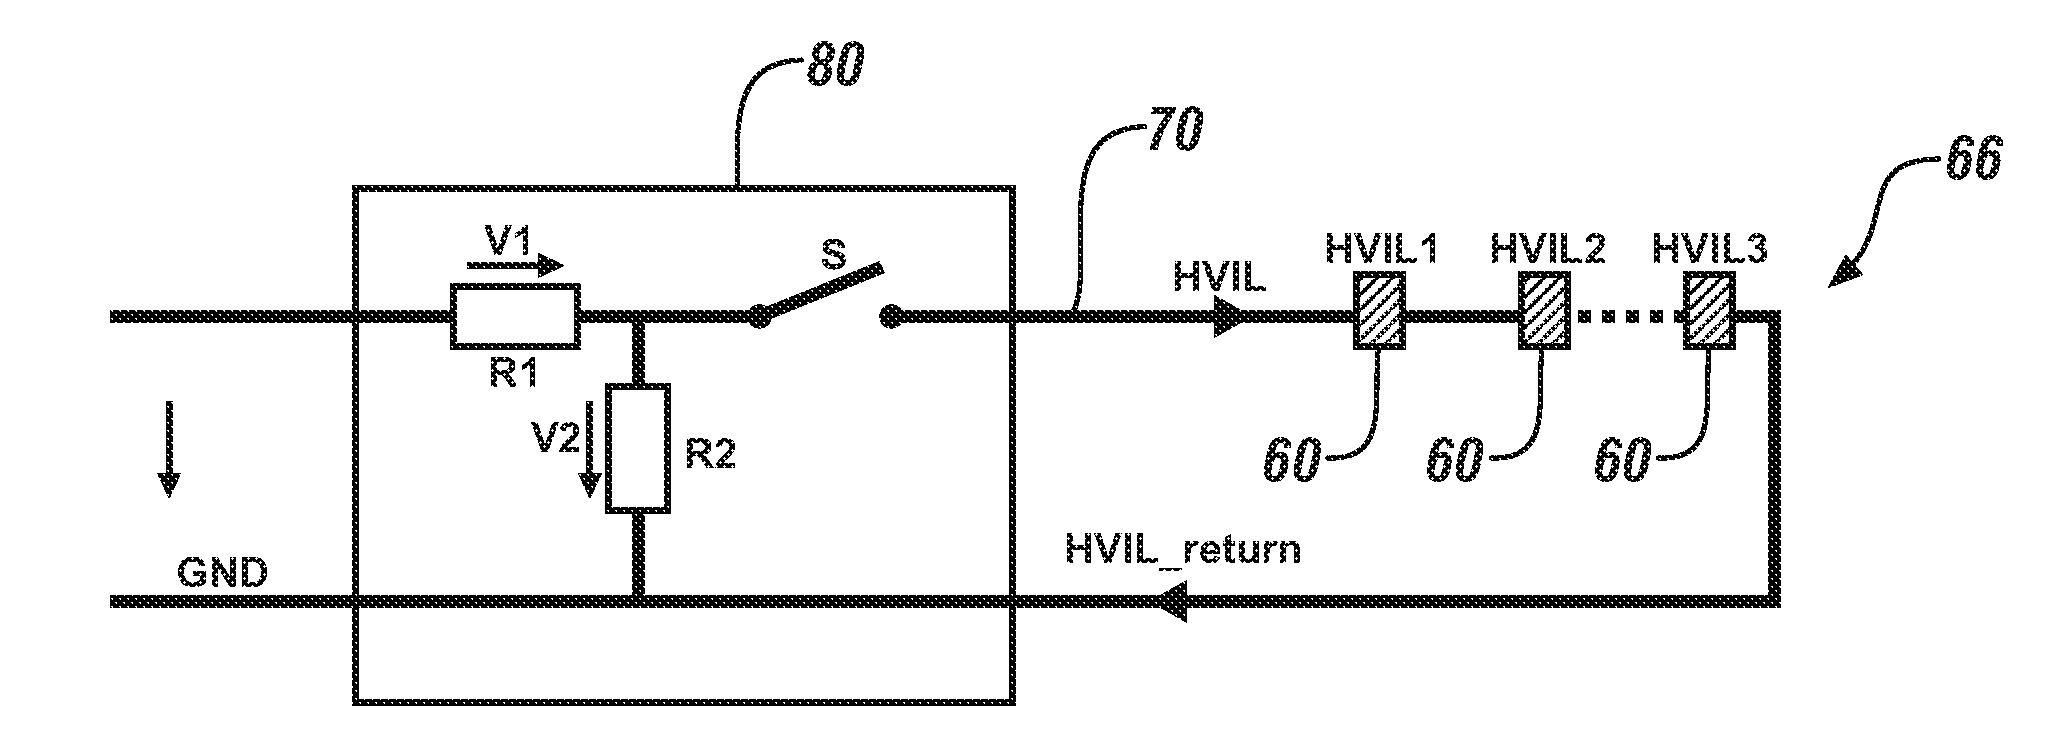 High-voltage interlock loop (“HVIL”) switch having a reed relay